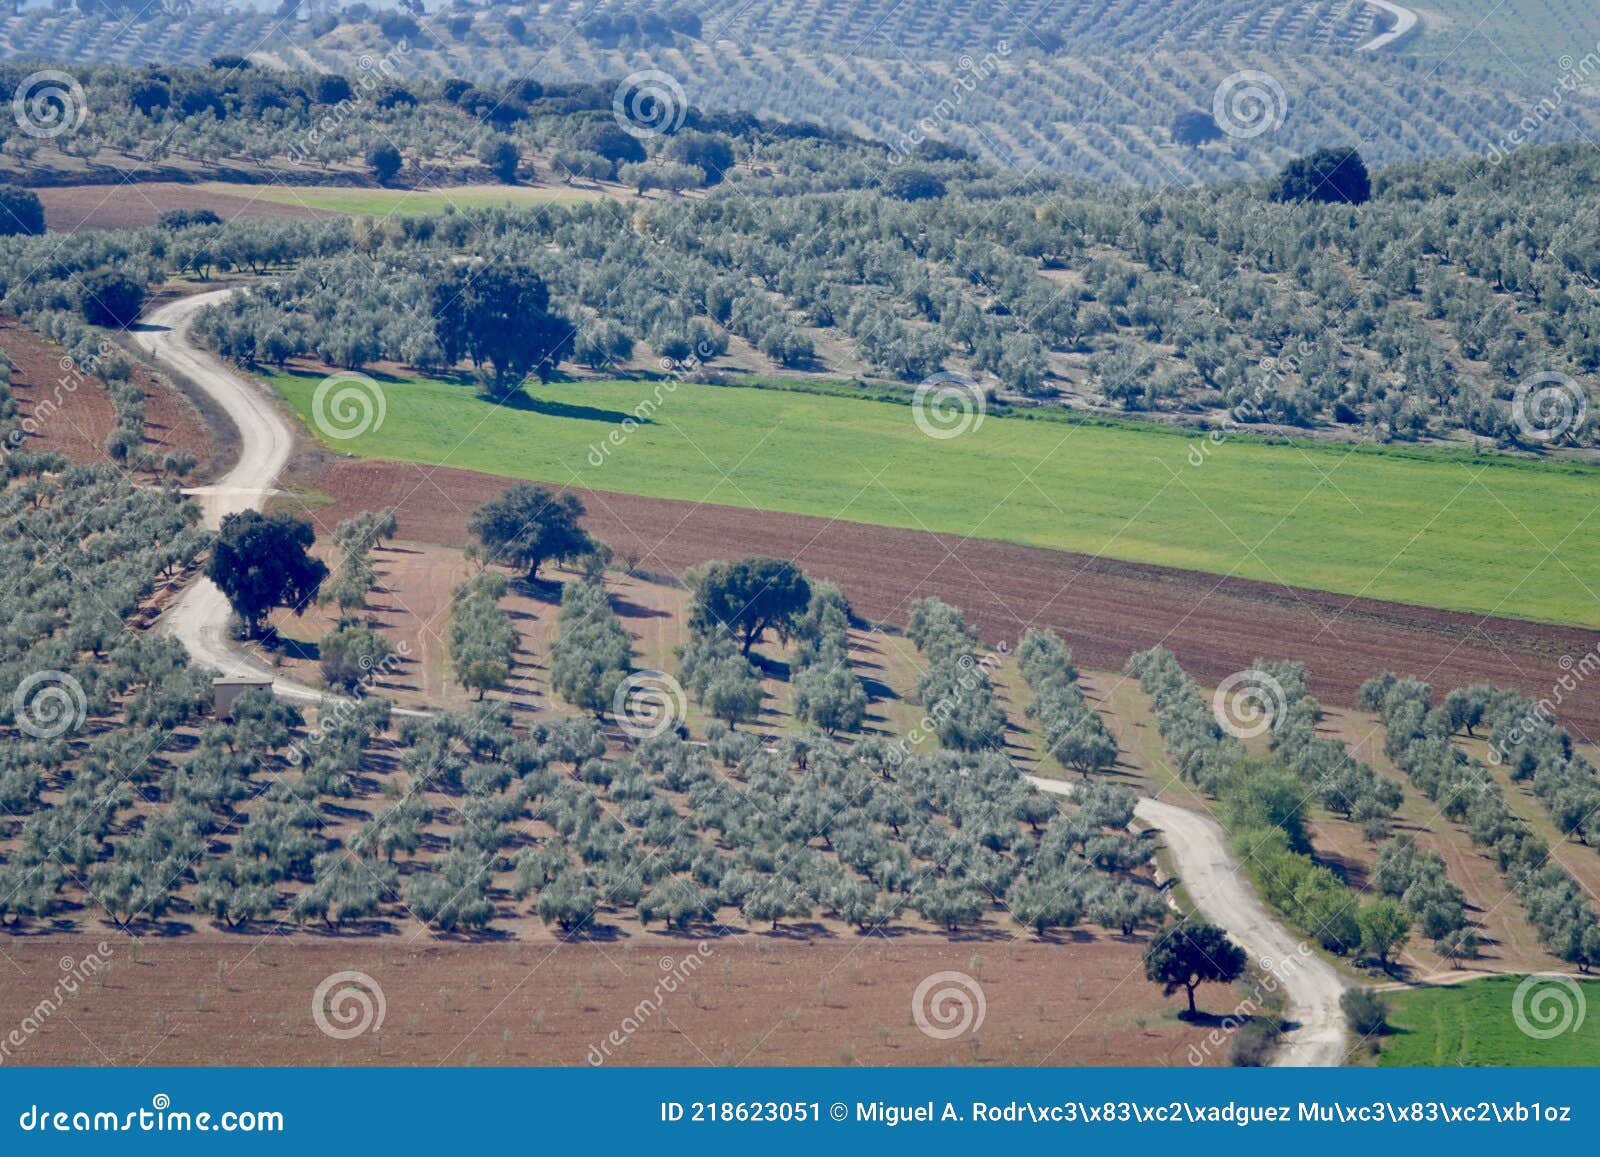 andalusian agricultural landscape along the `ruta de los cortijos` in domingo pÃÂ©rez spain